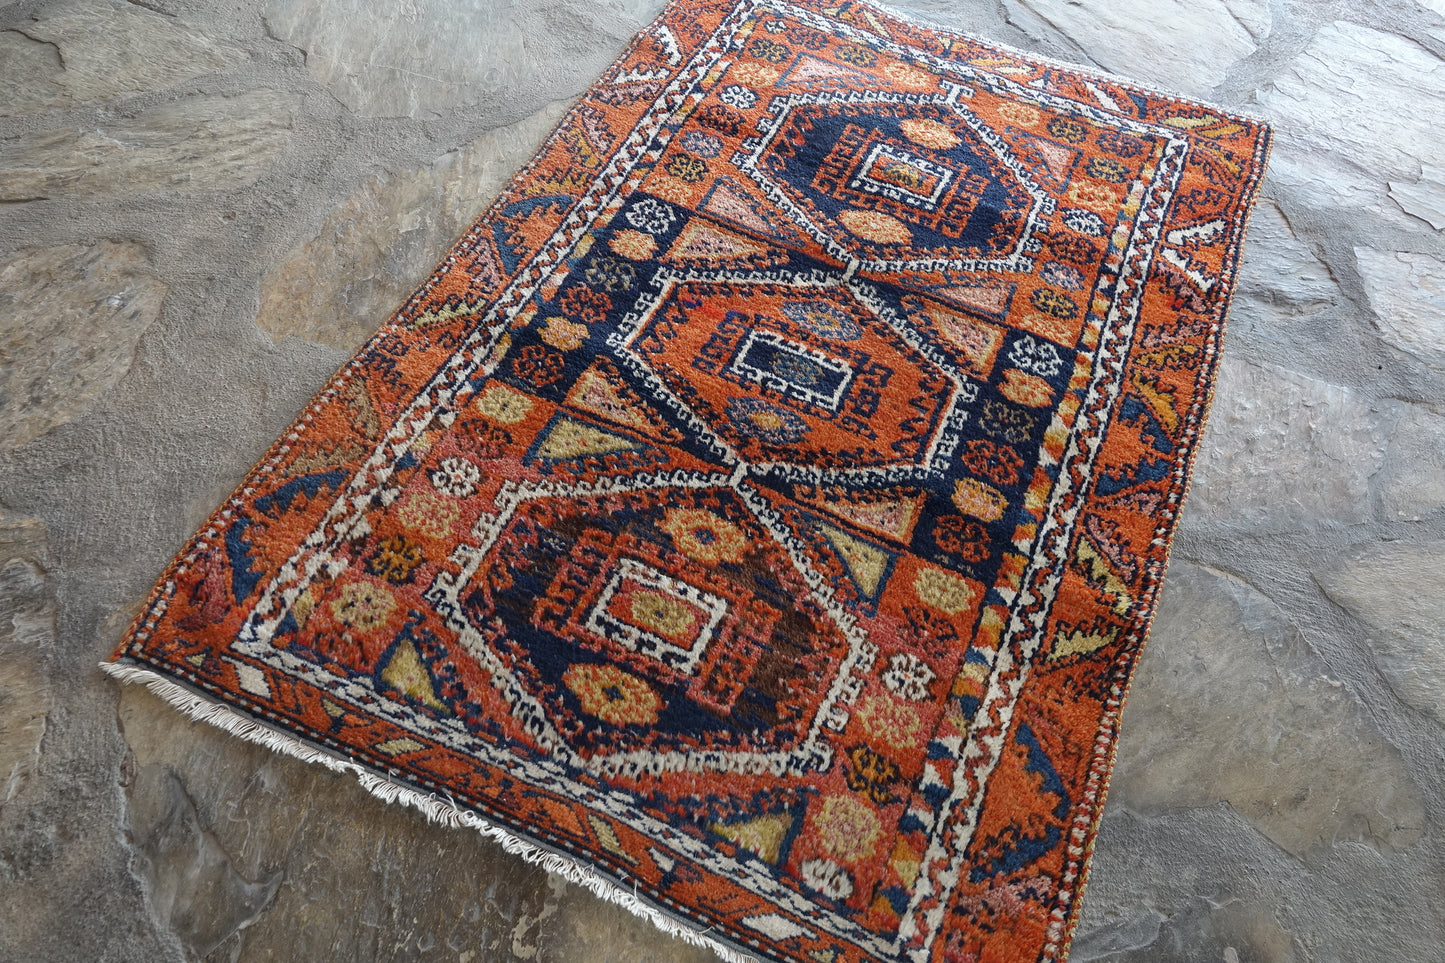 Sydney Anatolian Carpet